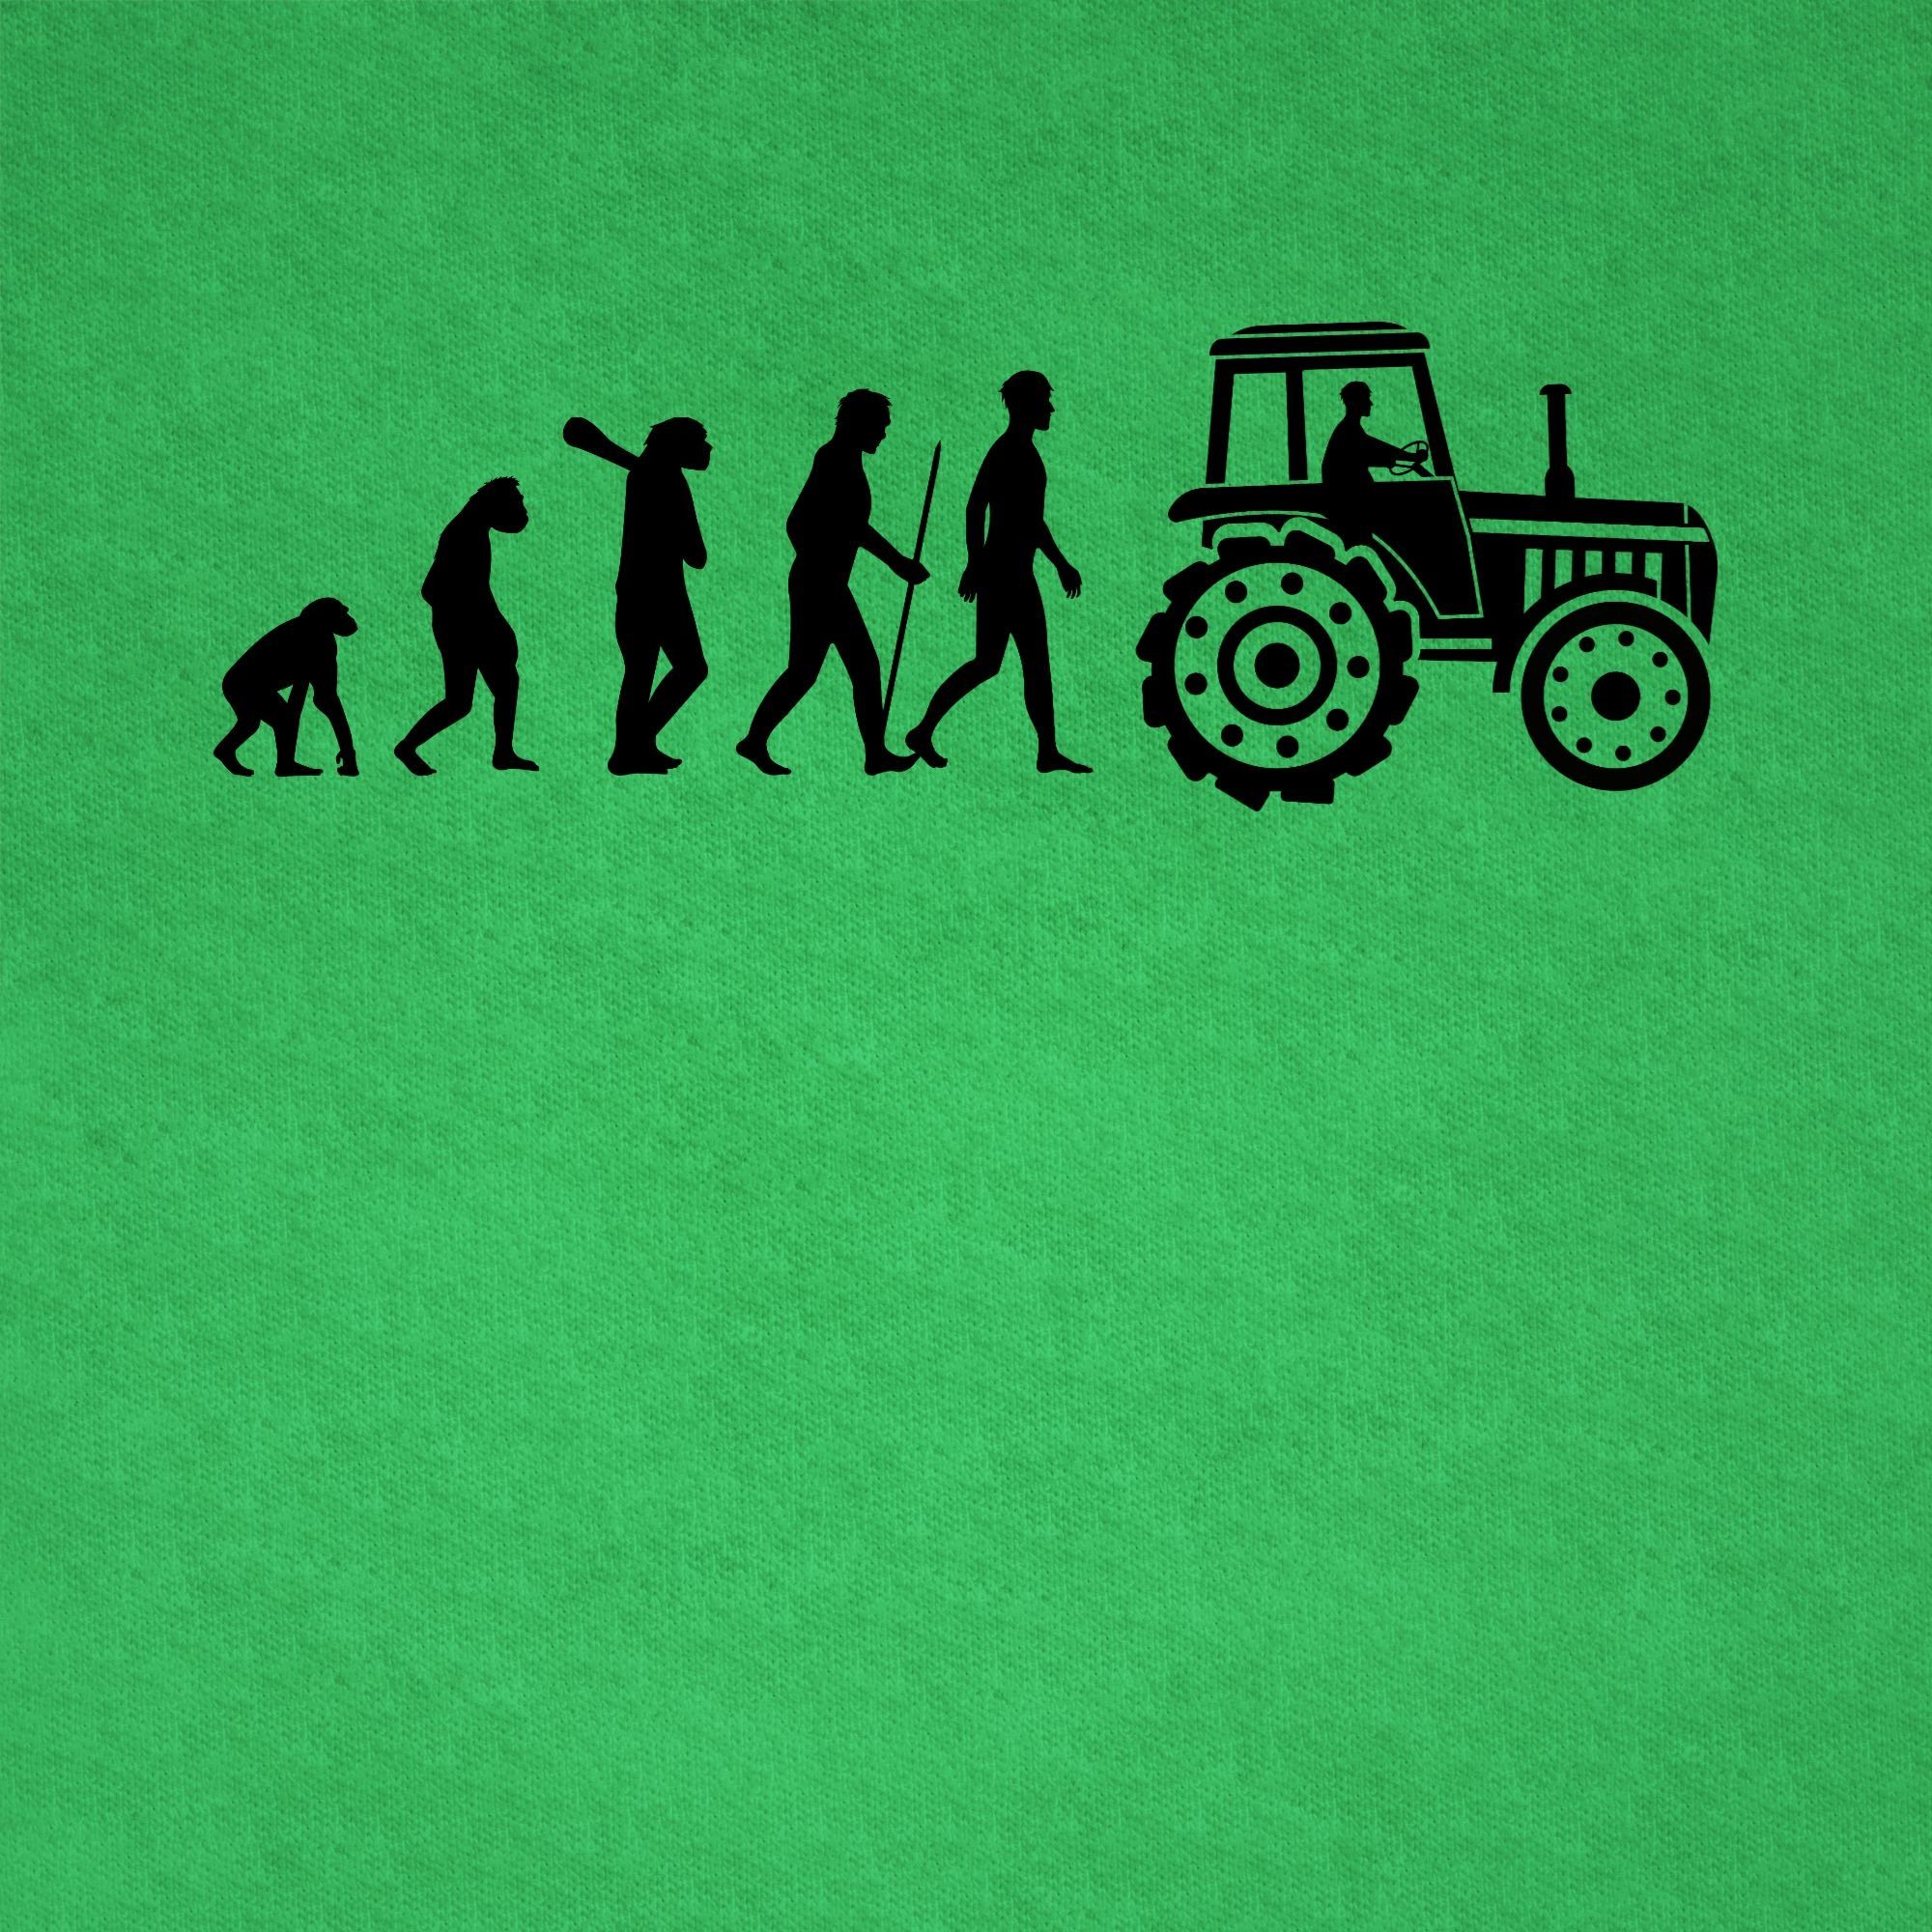 Shirtracer T-Shirt 1 Traktor Grün Evolution Traktor